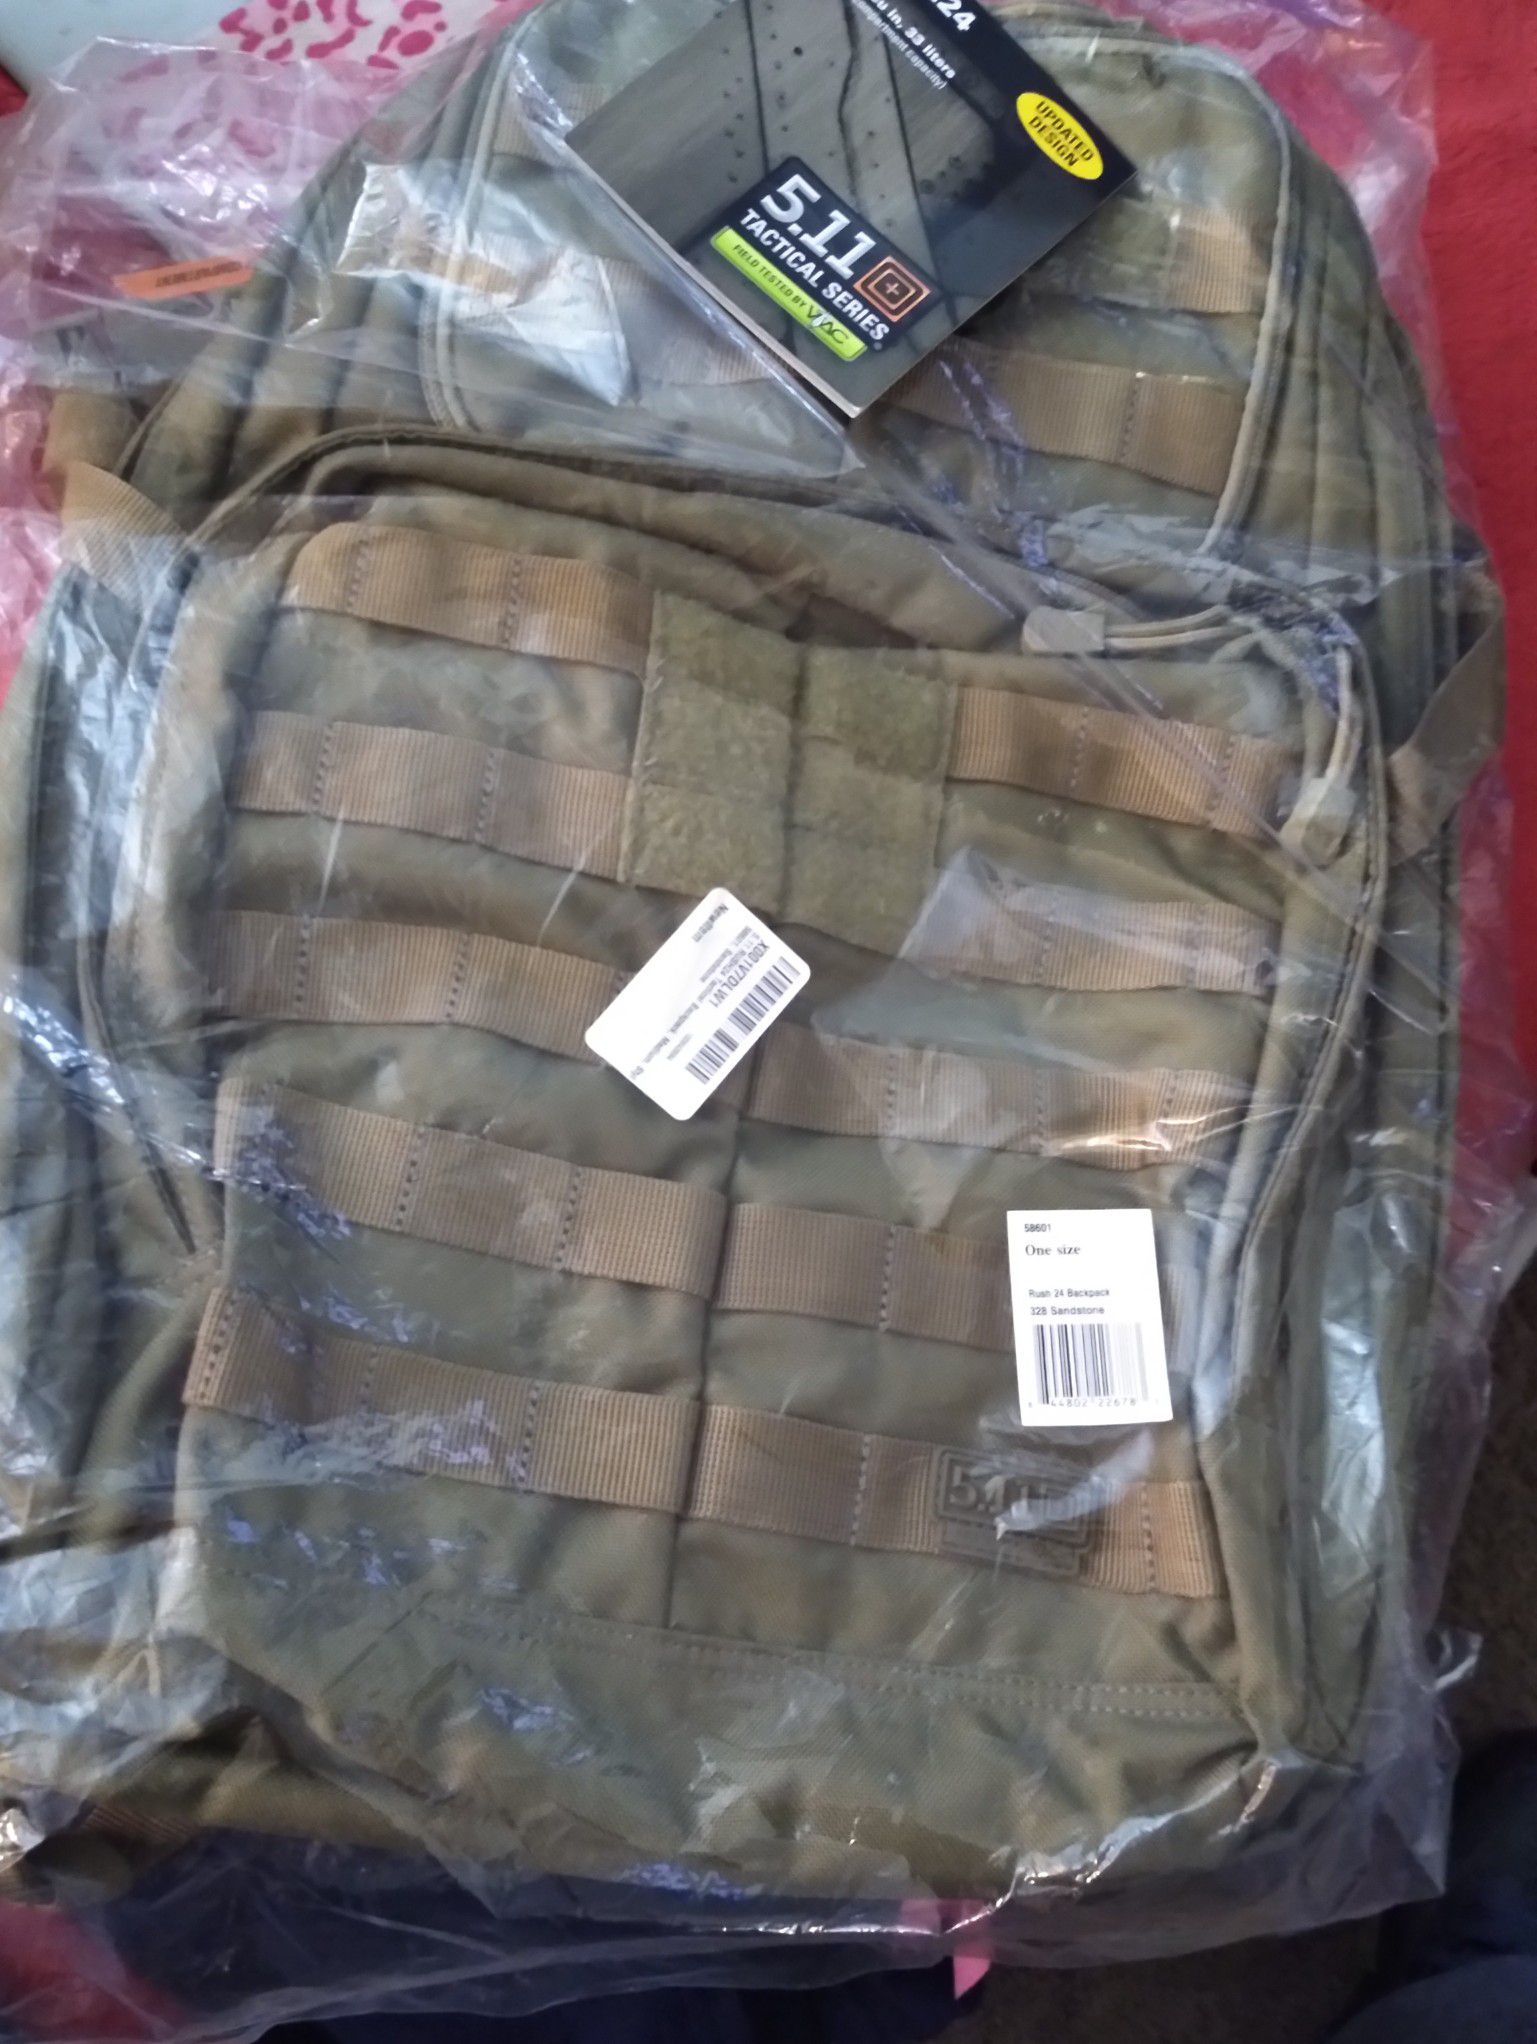 Tactical series backpacks